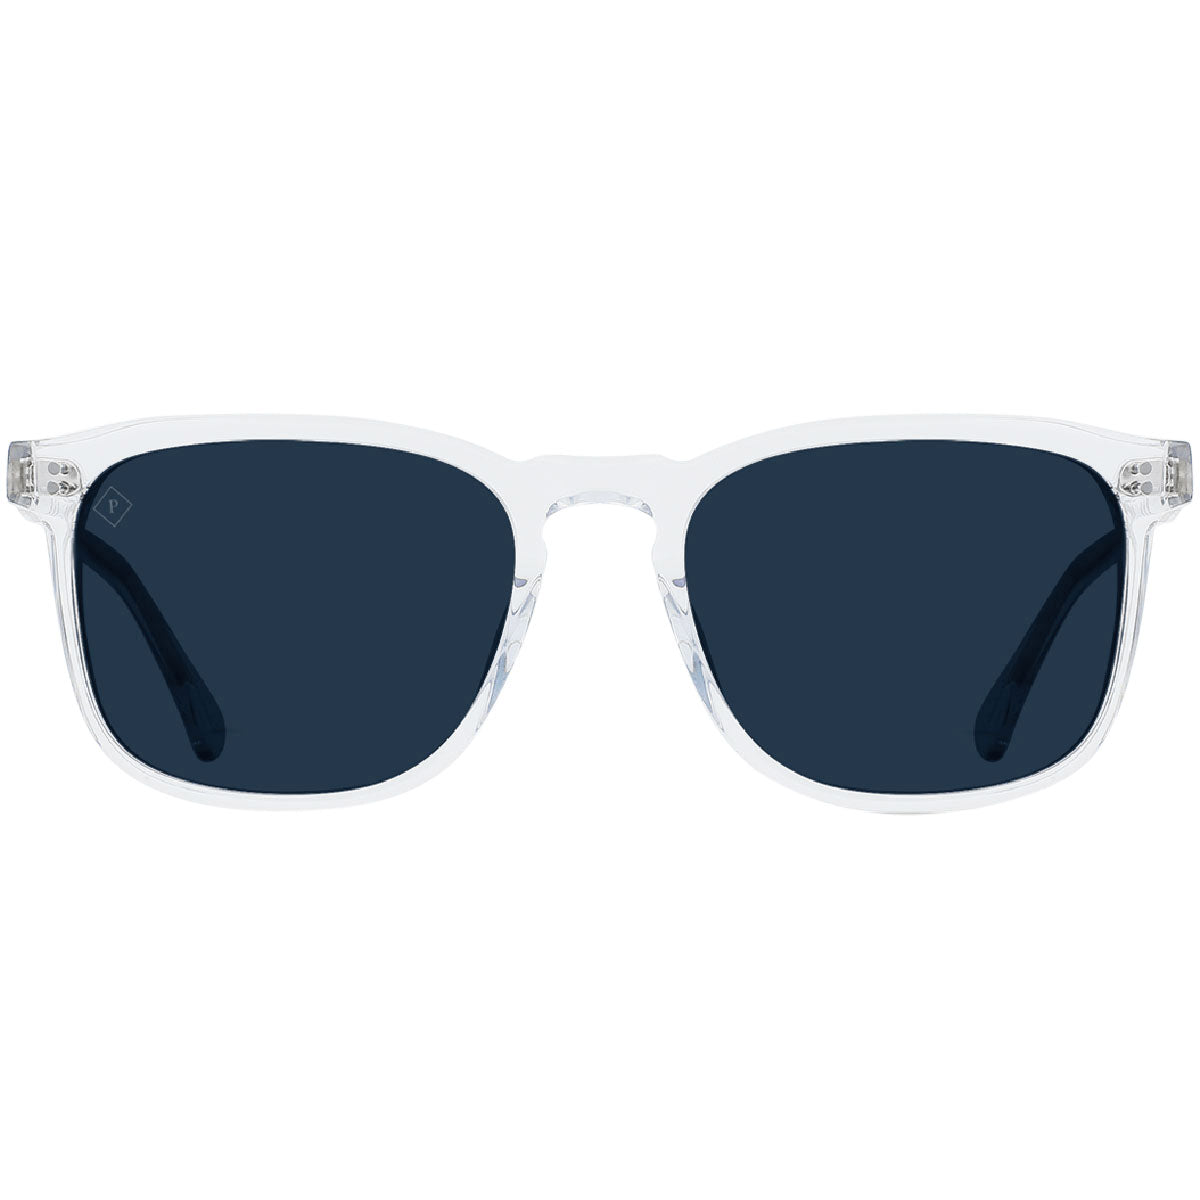 Raen Wiley 54 Sunglasses - Crystal Clear/Polarized Blue image 2